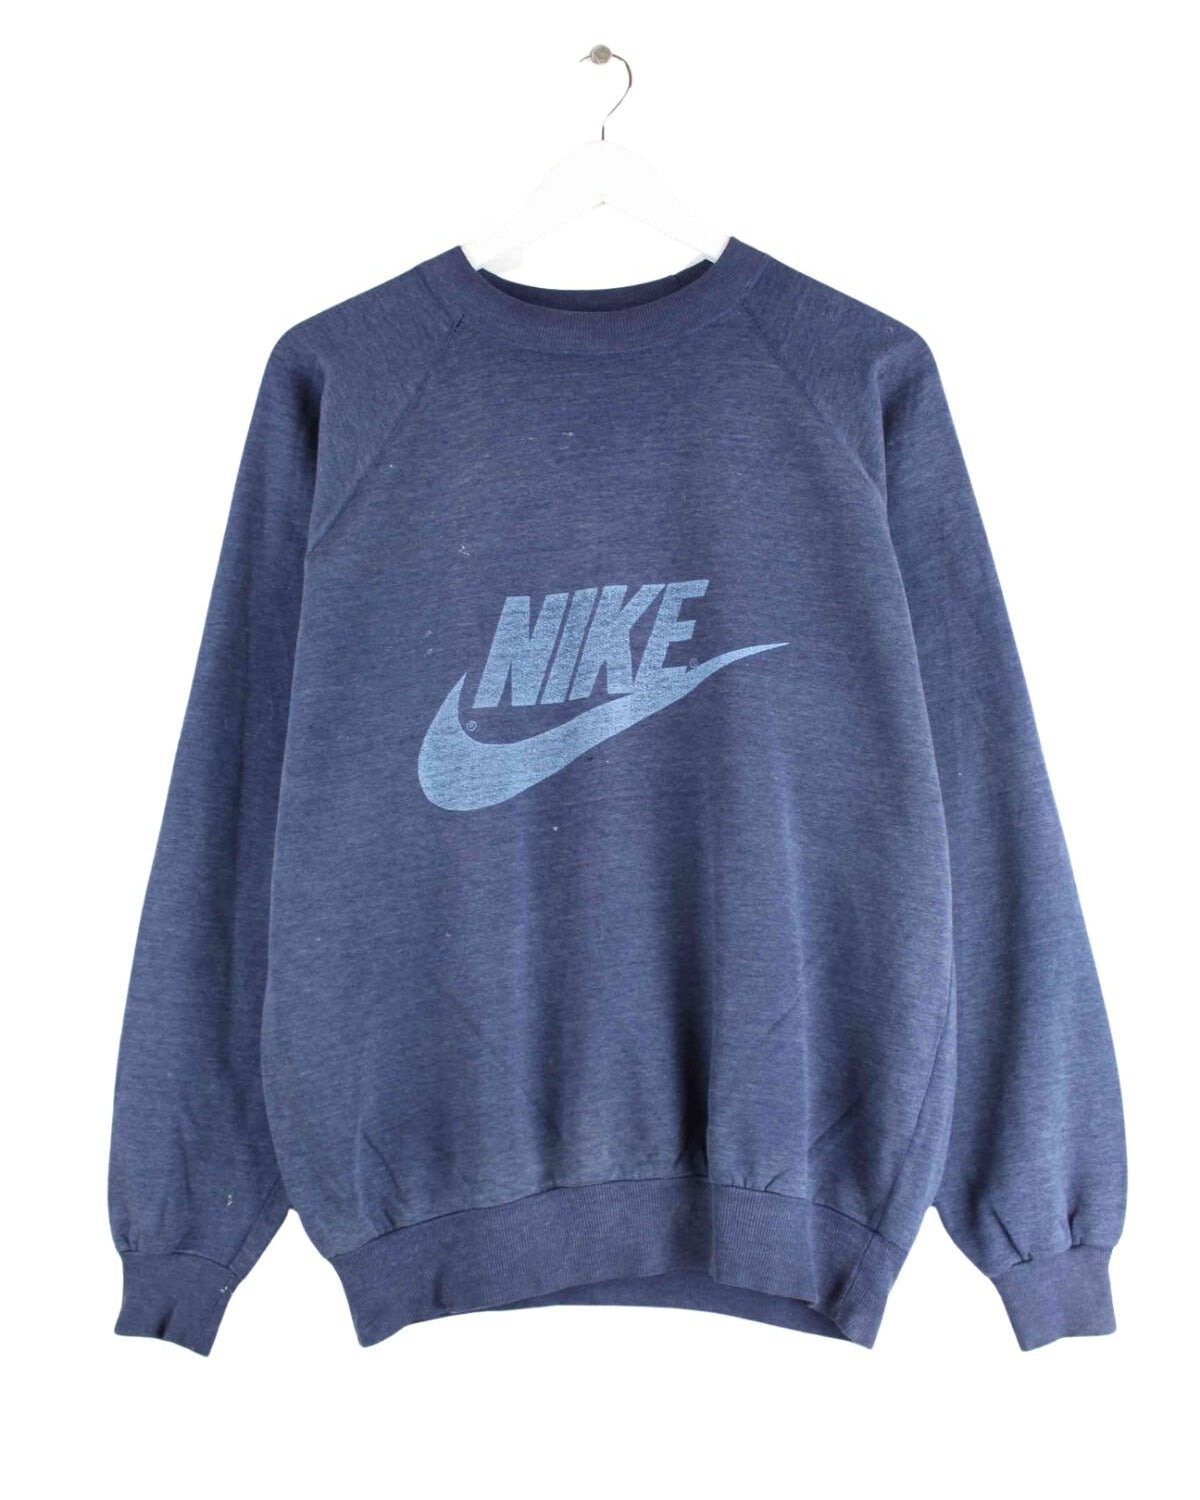 Nike 70s Vintage Print Sweater Blau M (front image)